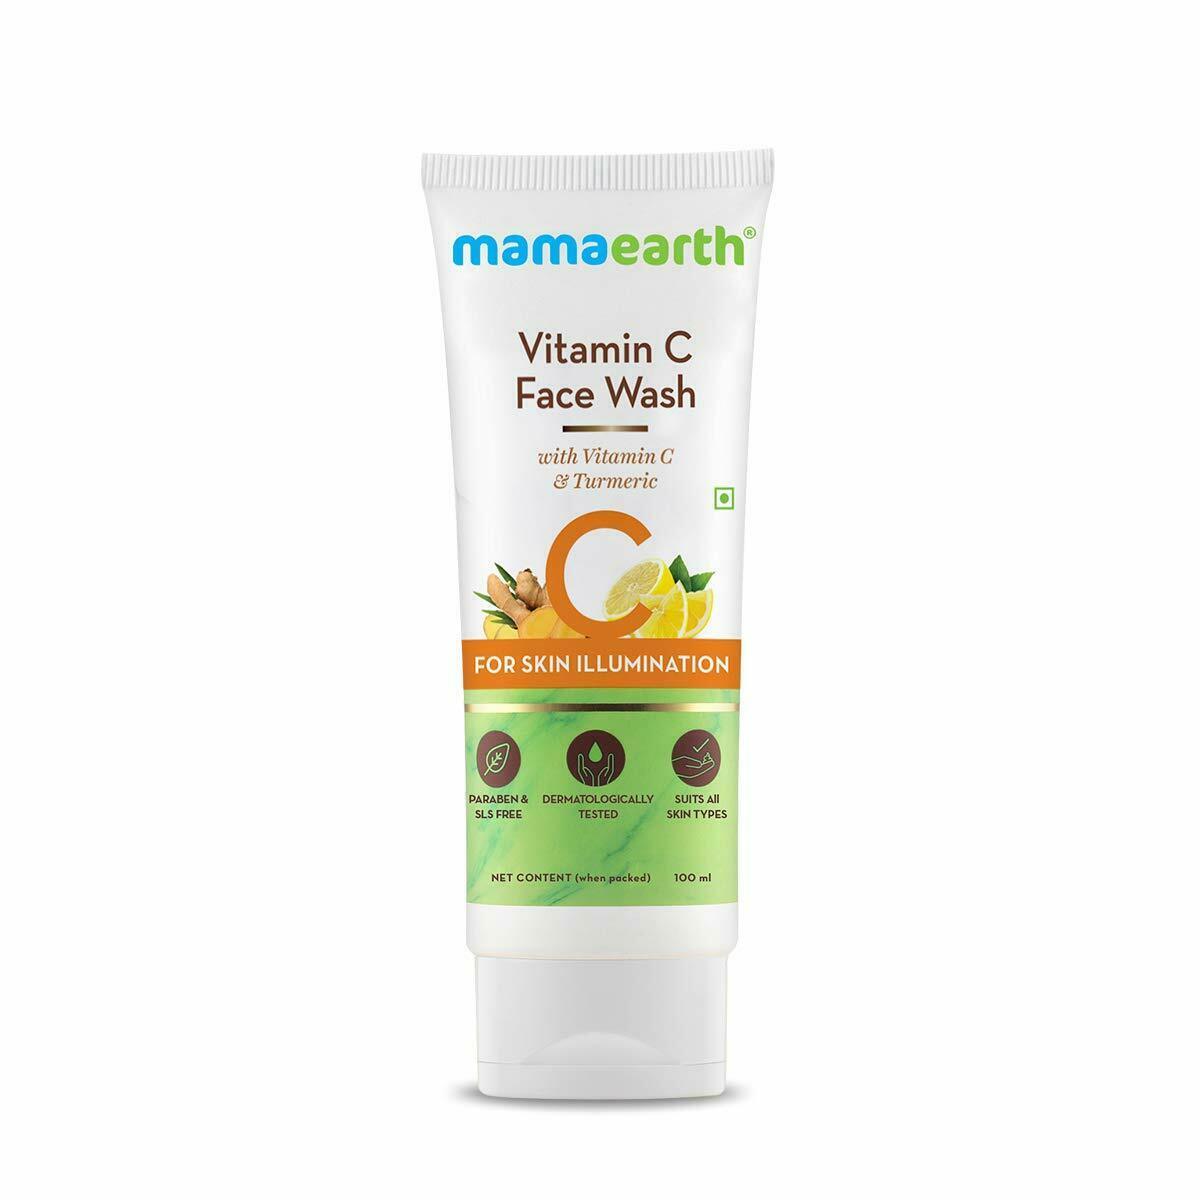 2x Mamaearth Vitamin C Face Wash with Vitamin C Turmeric Skin Illumination 100ml